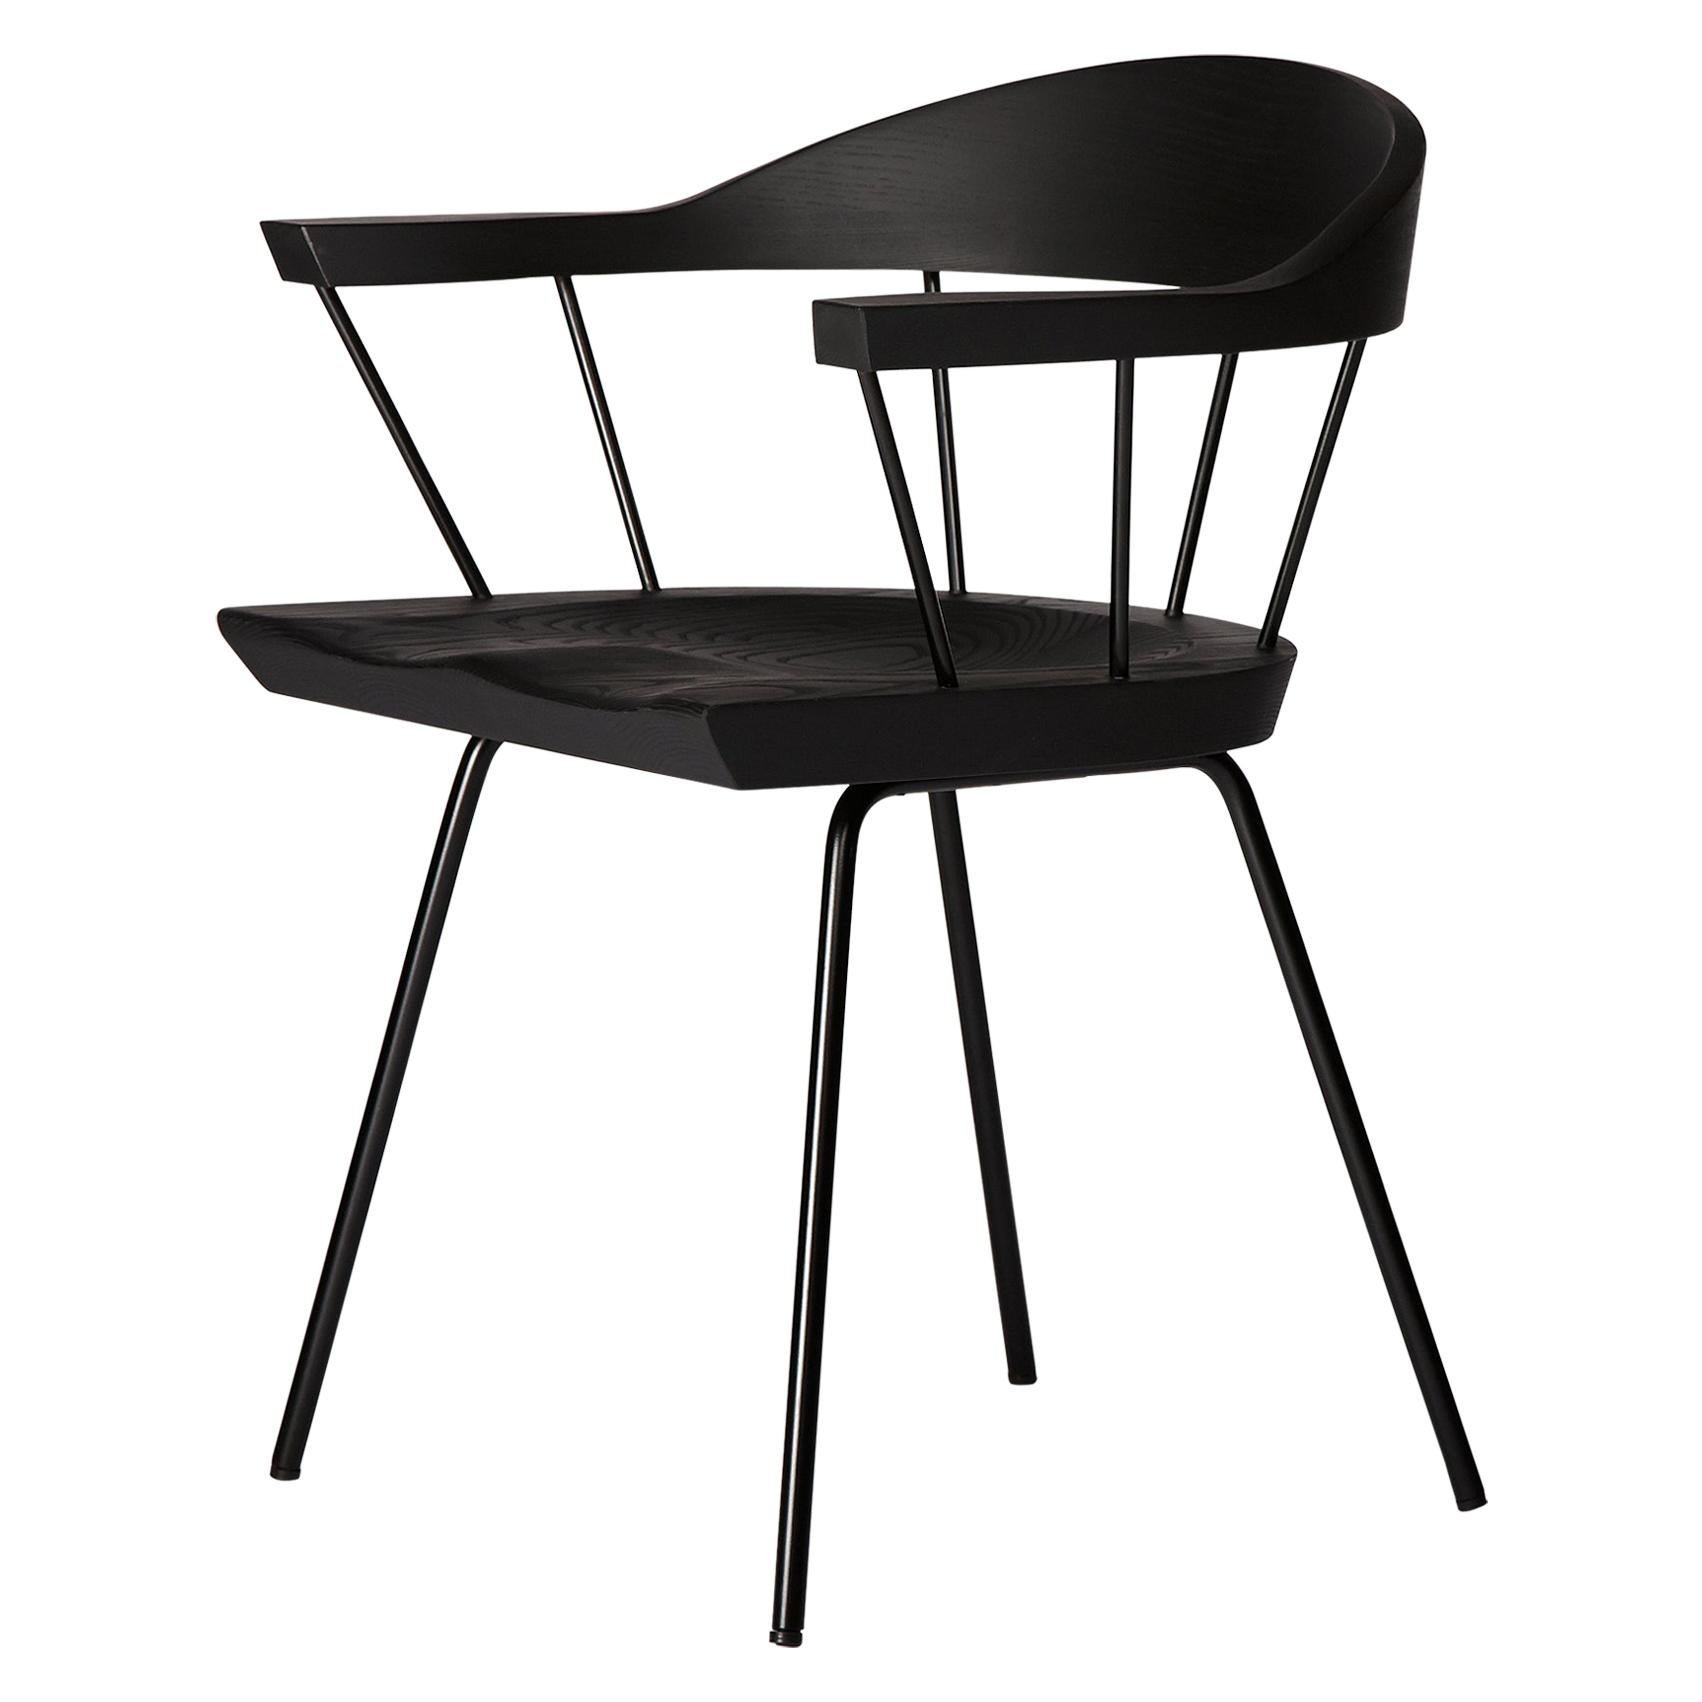 For Sale: Black (Metal Matte Black) Spindle Chair in Solid, Carved Ebonized Ash and Steel Designed by Craig Bassam